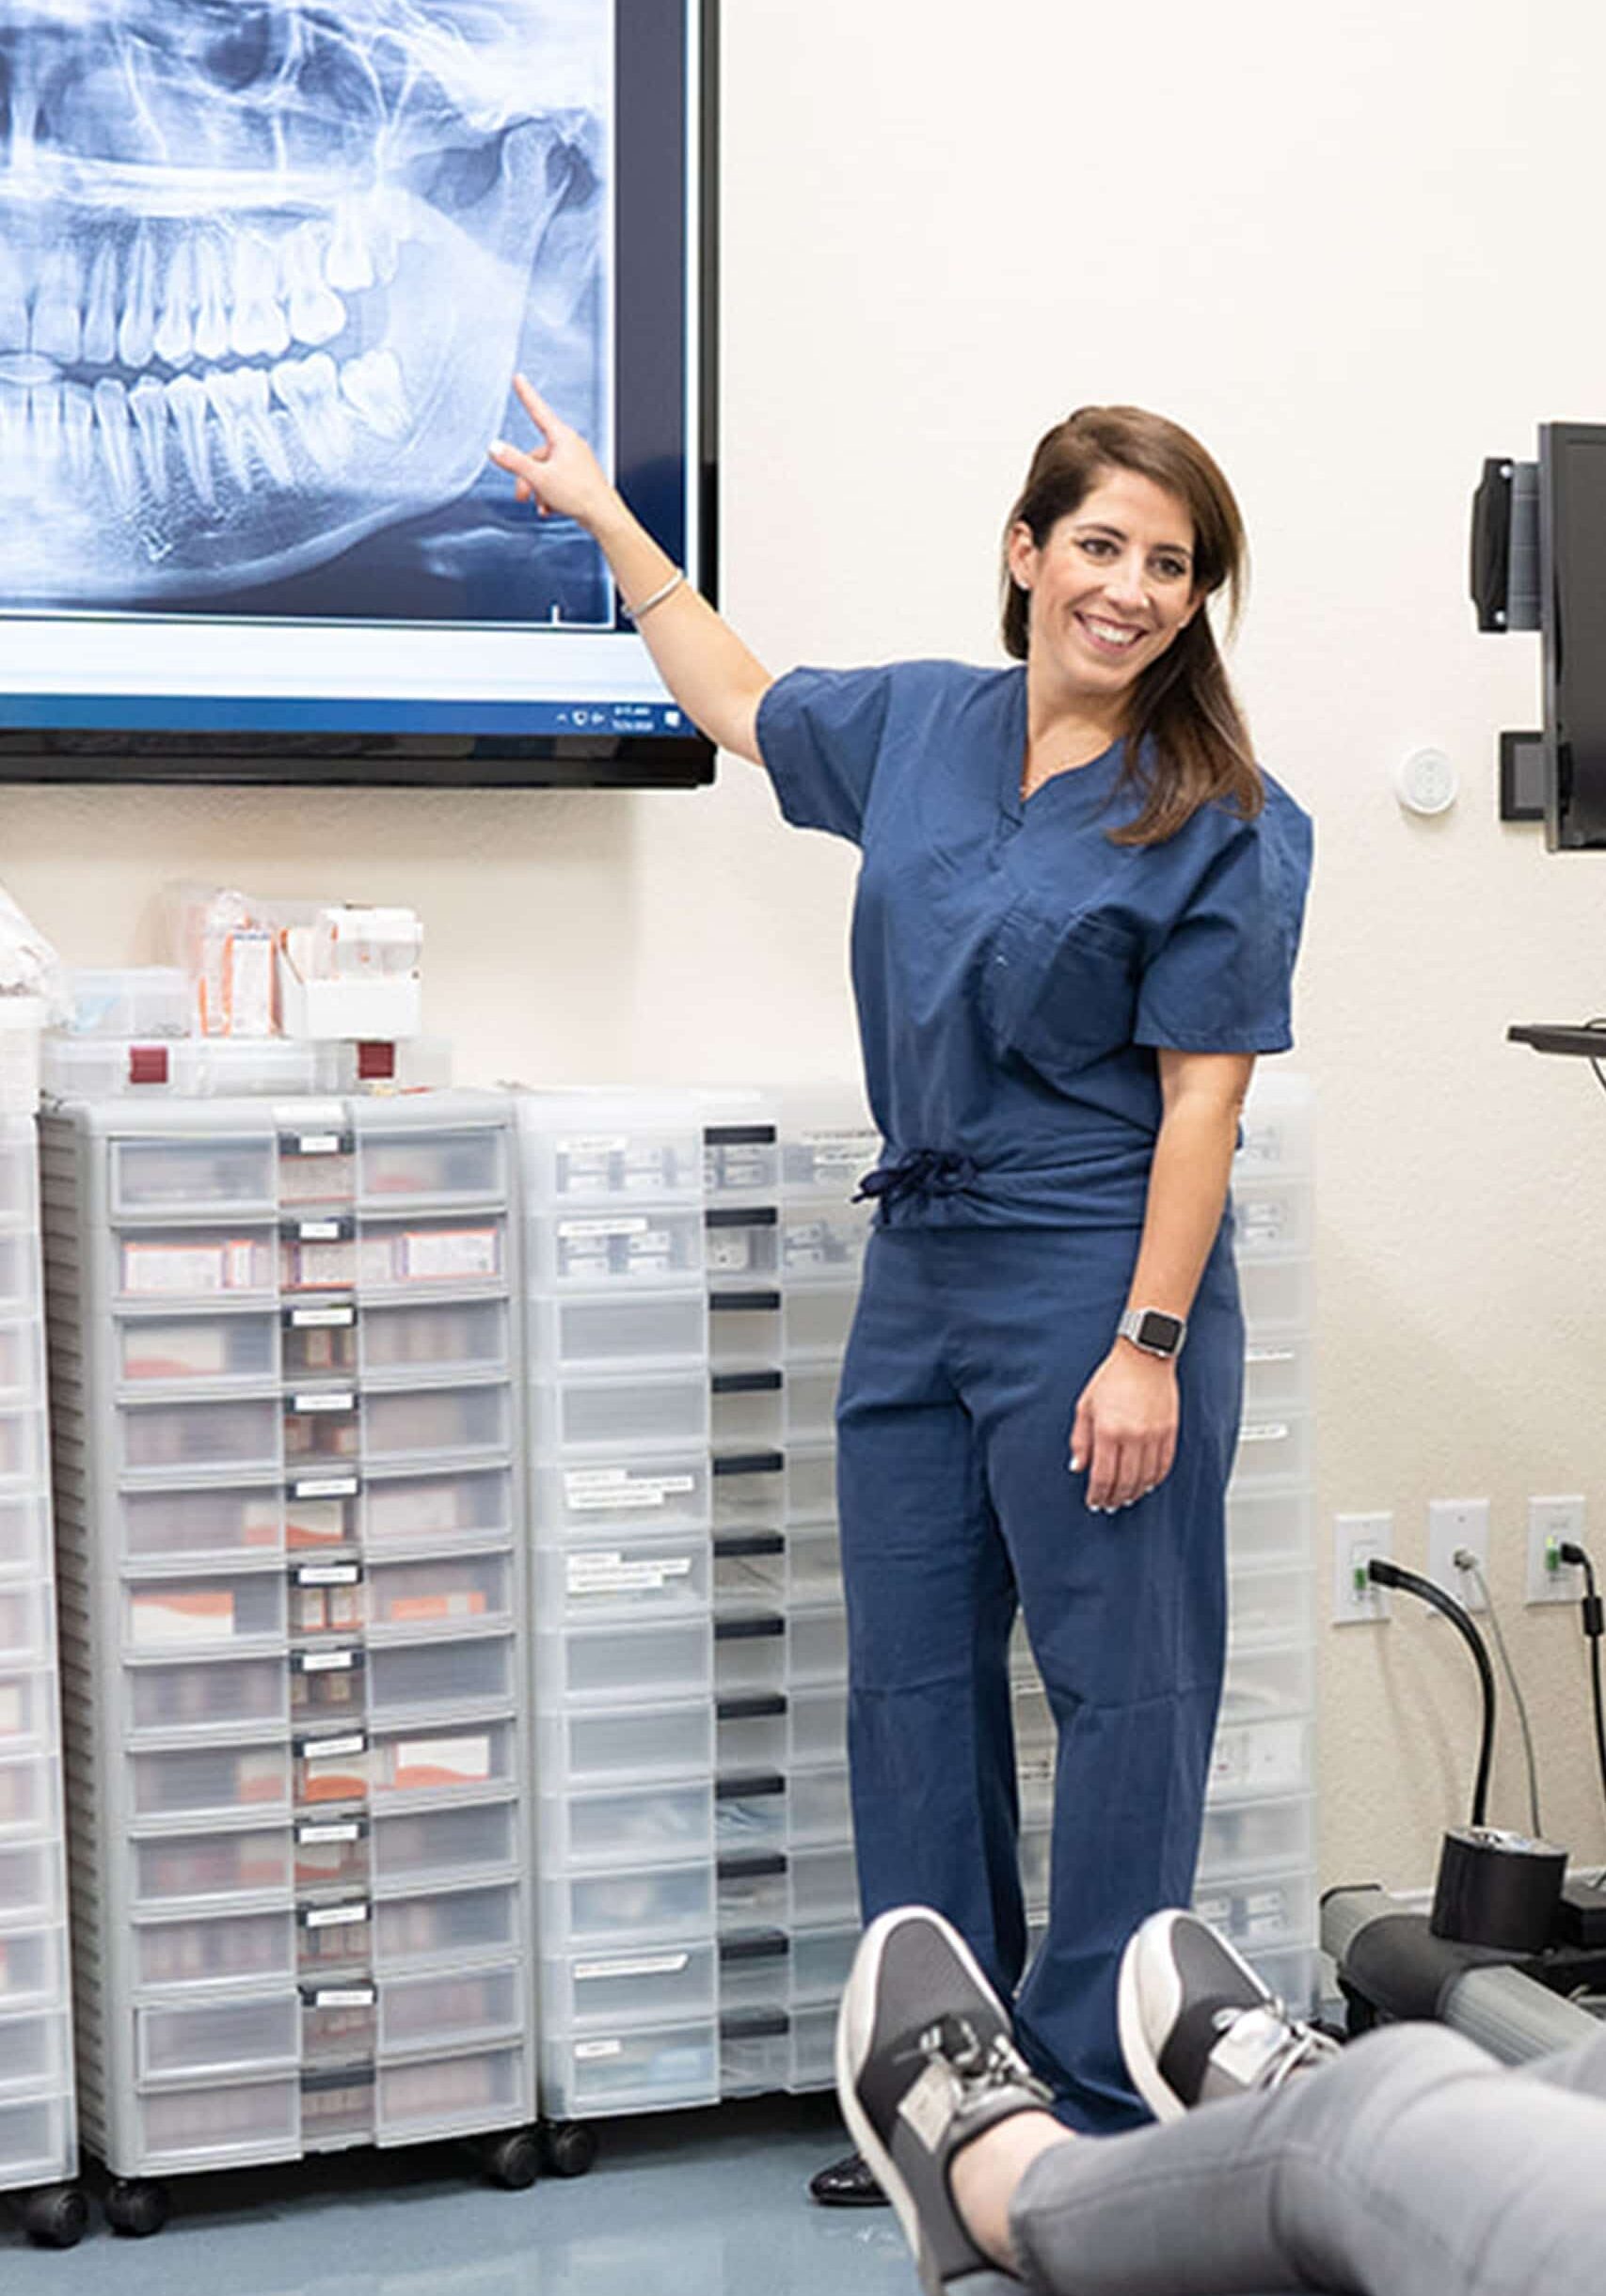 Dr. Nicole Hernandez
<br/>
<br/>
Coastal Jaw Surgery